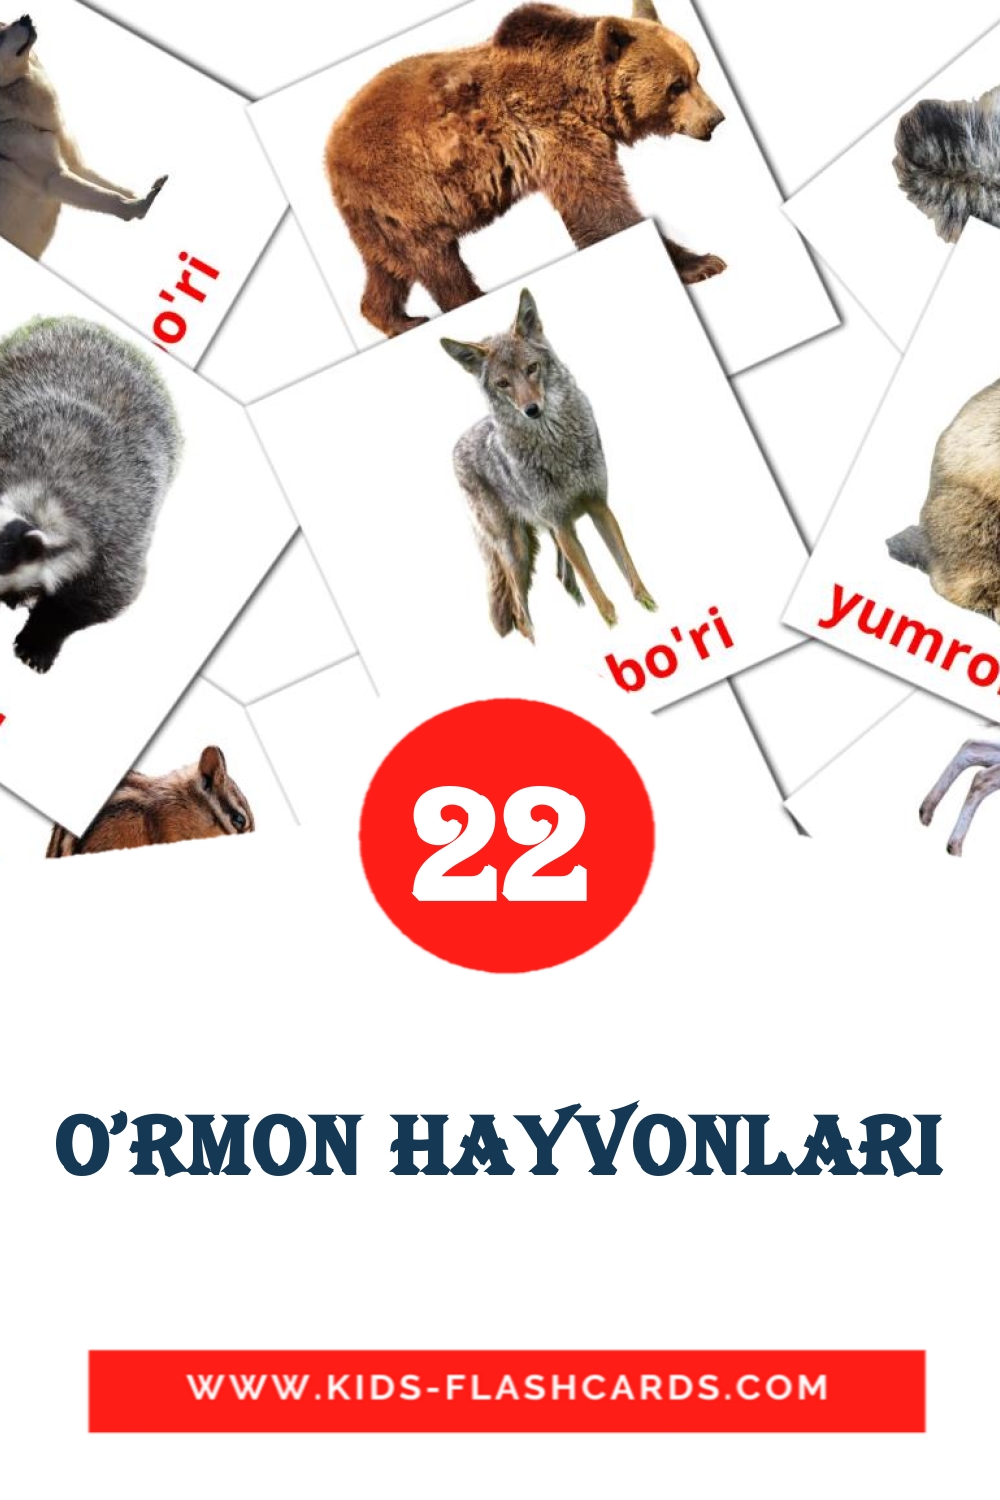 22 O'rmon hayvonlari Picture Cards for Kindergarden in uzbek